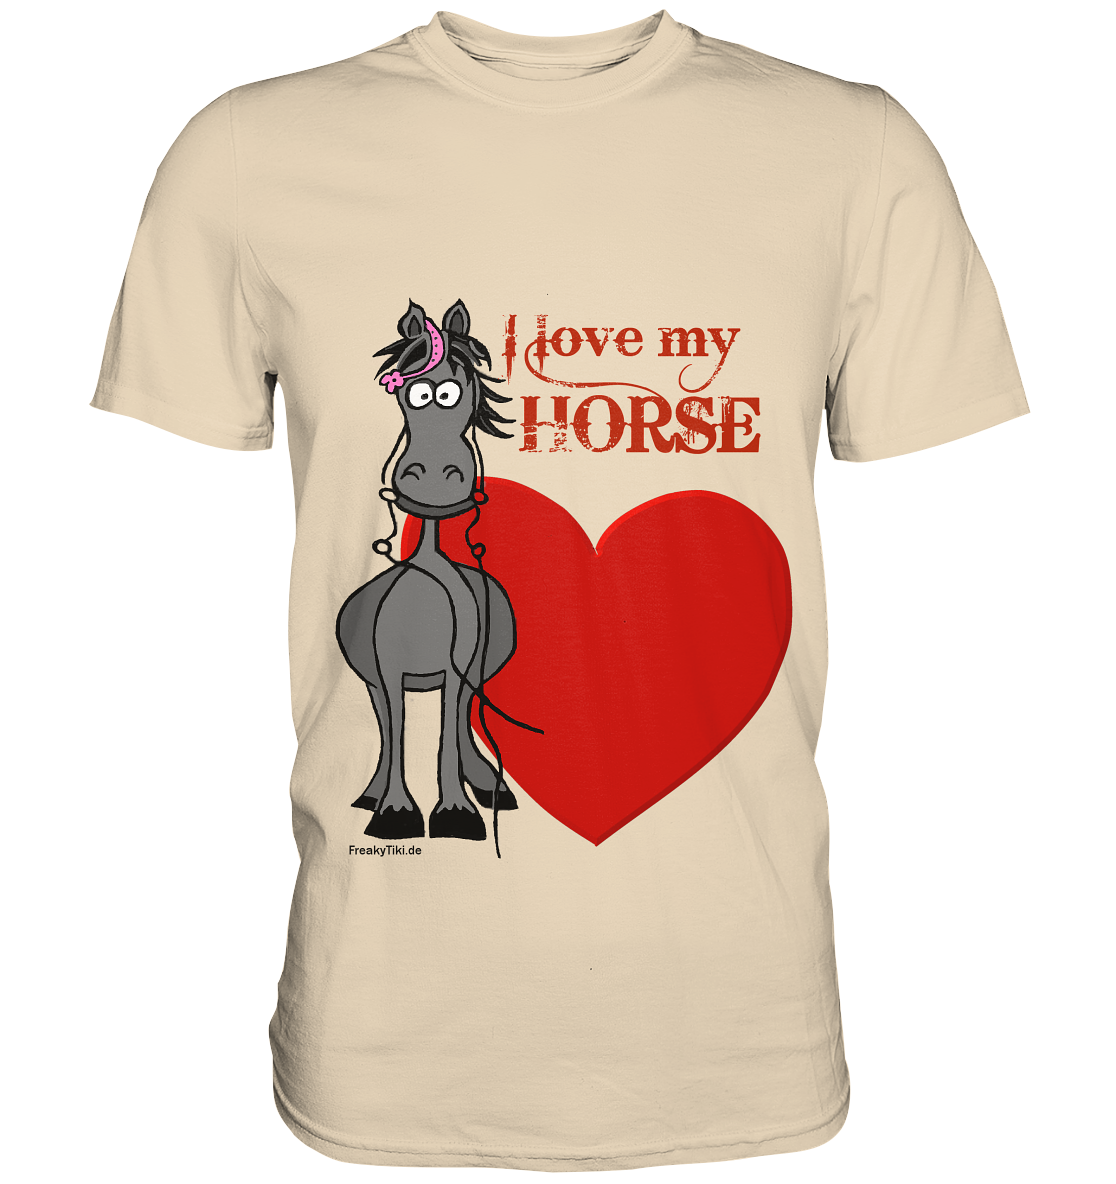 I love my horse. - Unisex Premium Shirt